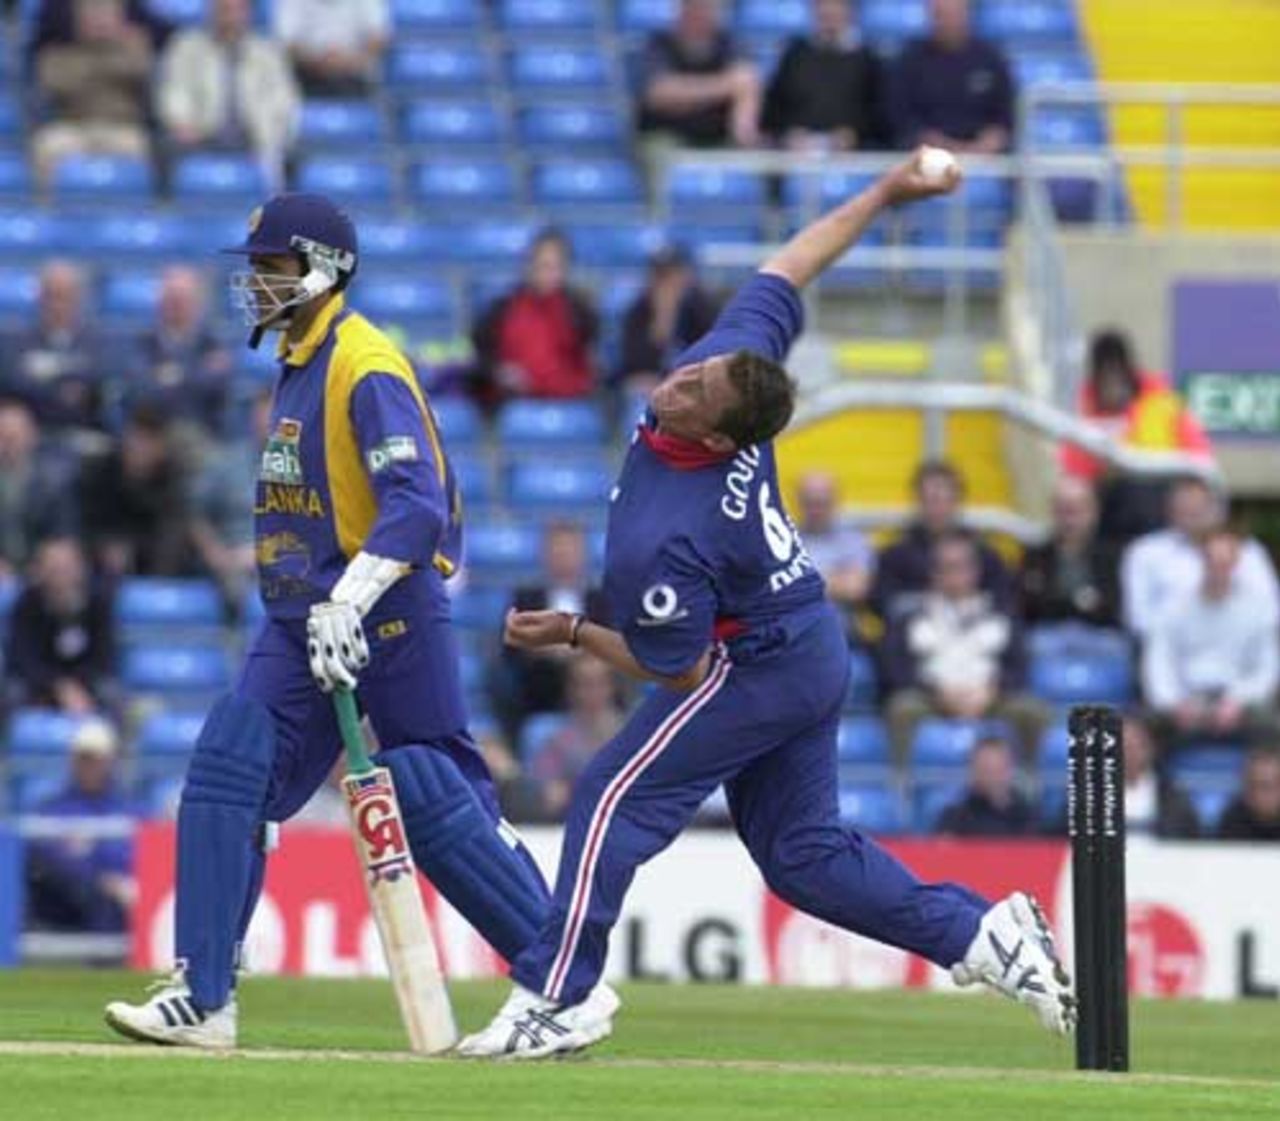 Gough bowling from the Pavilion end, England v Sri Lanka at Leeds, July 2002